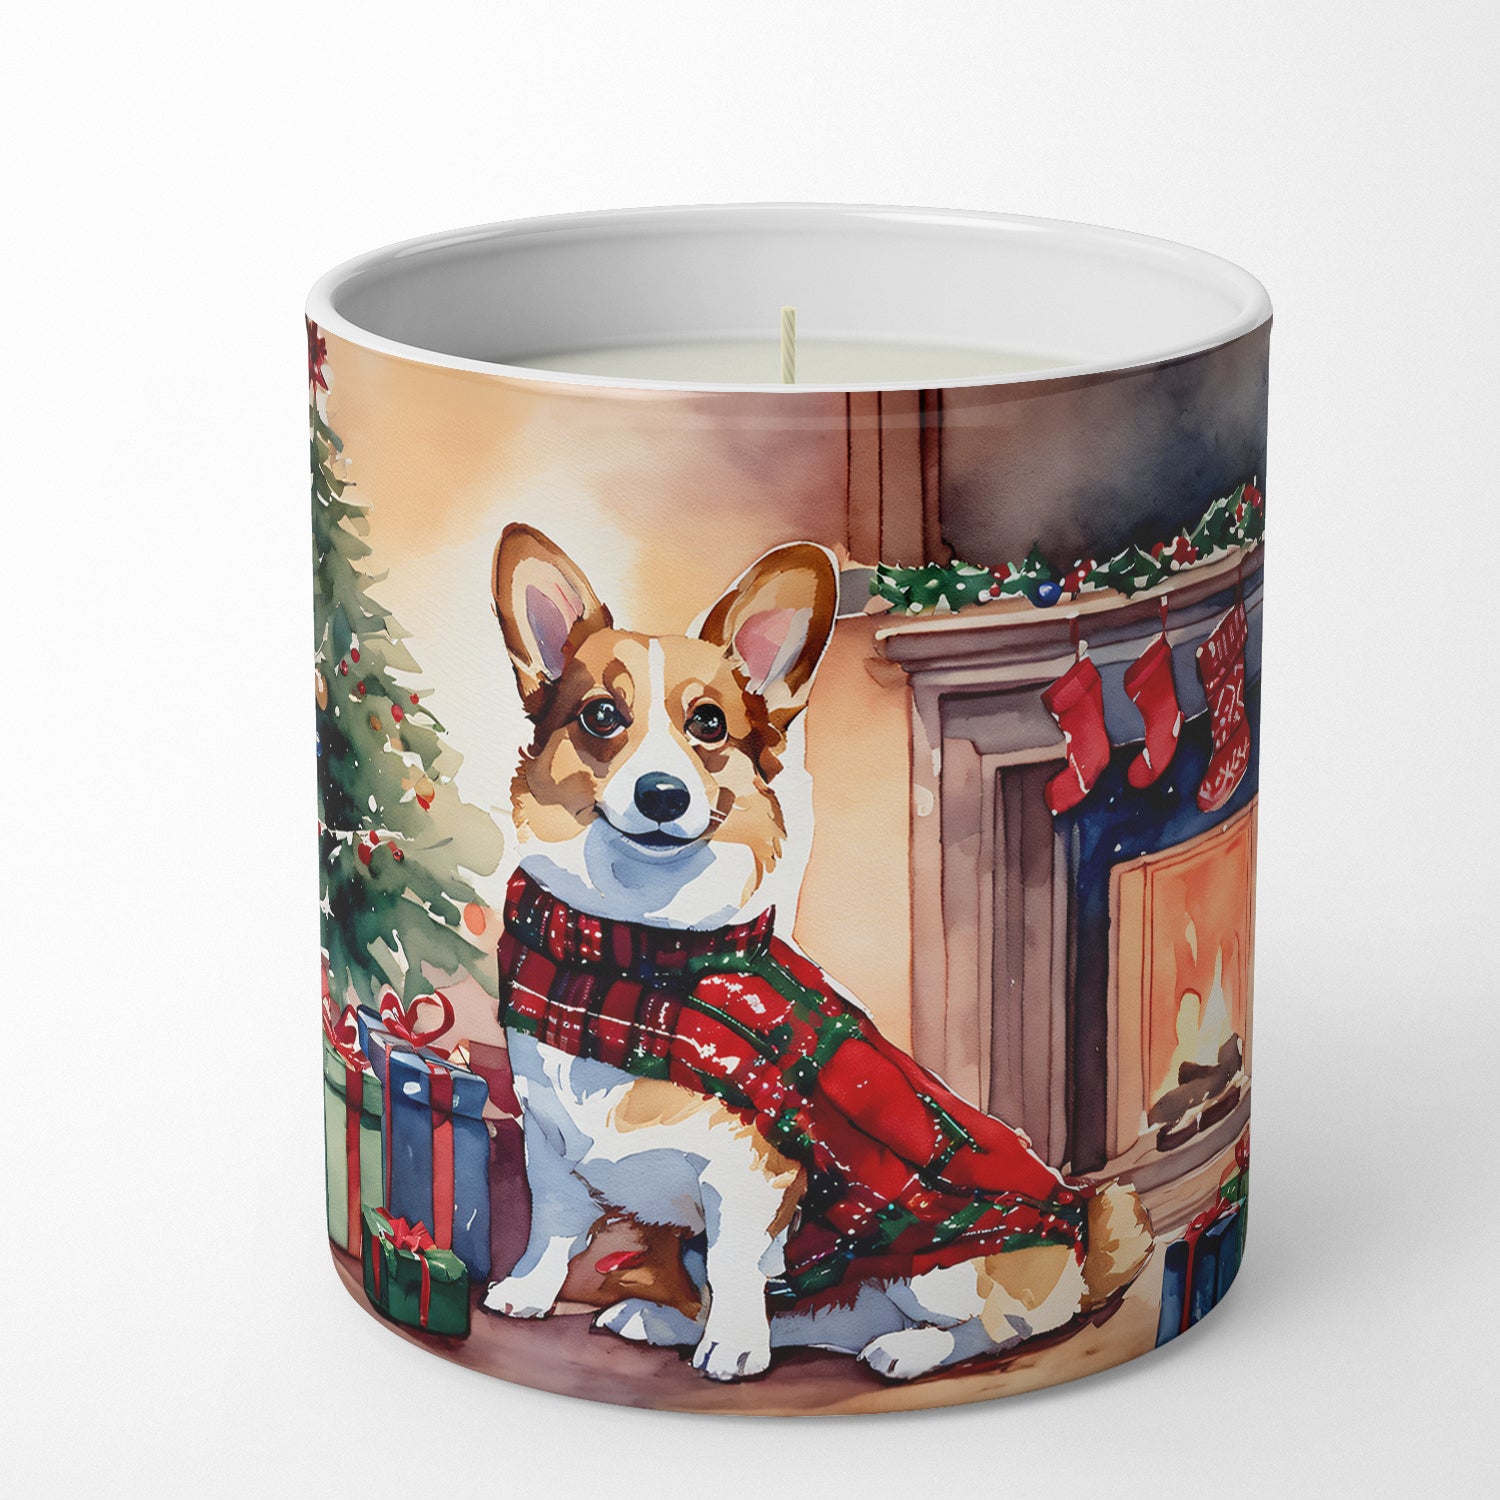 Buy this Corgi Cozy Christmas Decorative Soy Candle